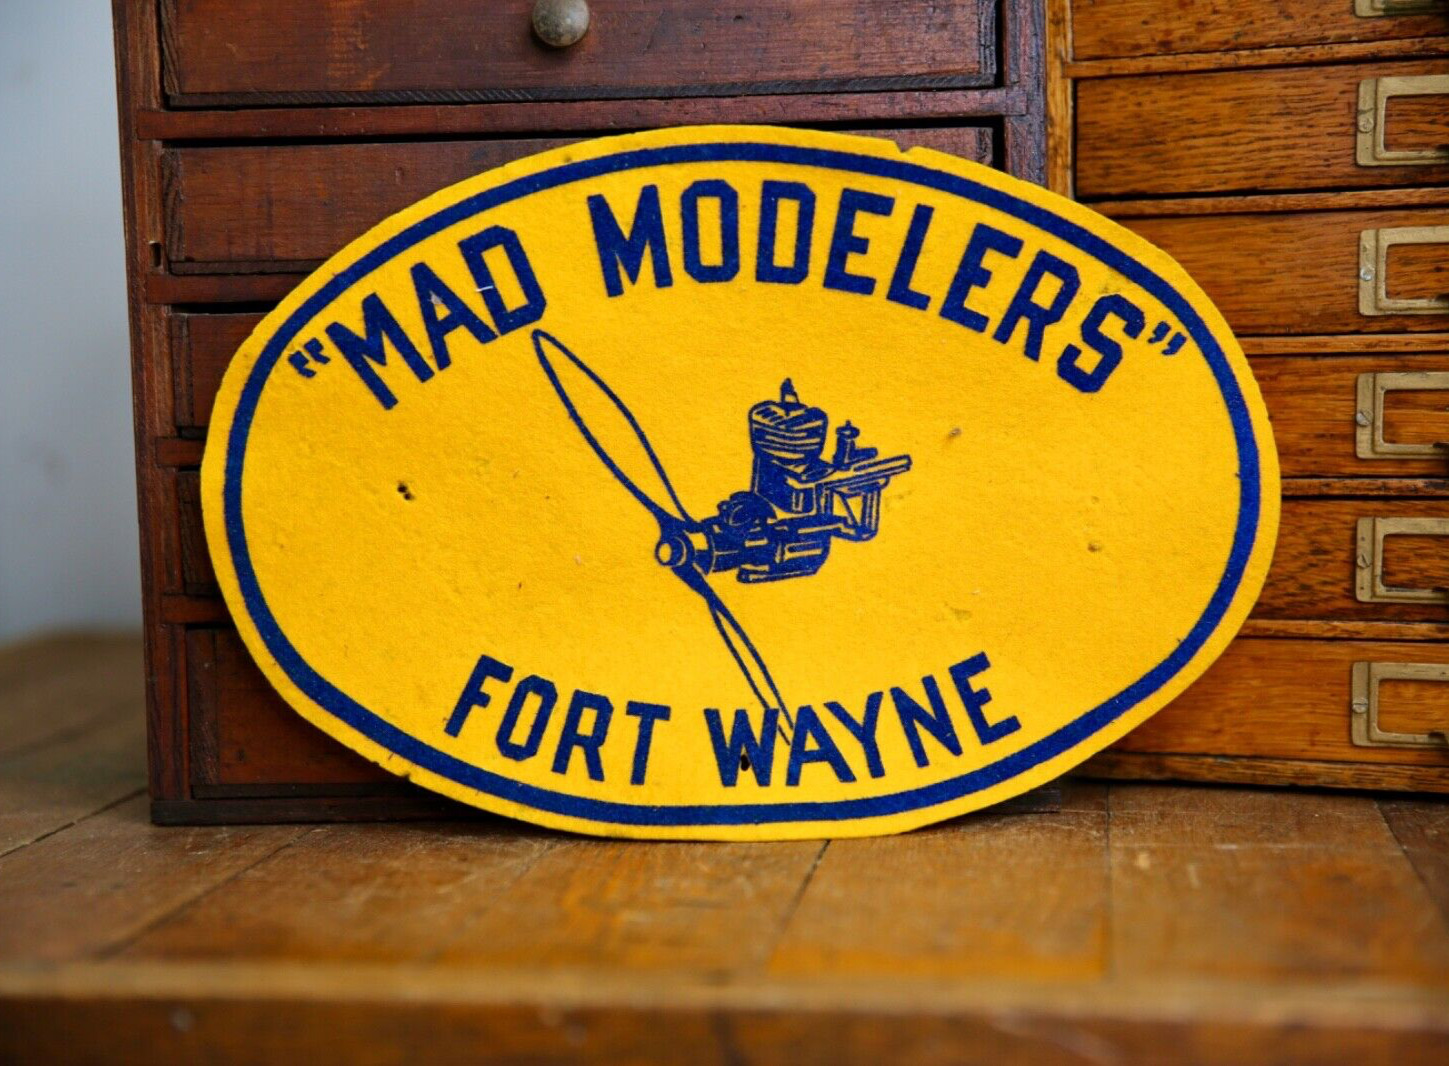 Vintage Fort Wayne Indiana Mad Modelers Cox Engine Tether Car Shirt Jacket Patch